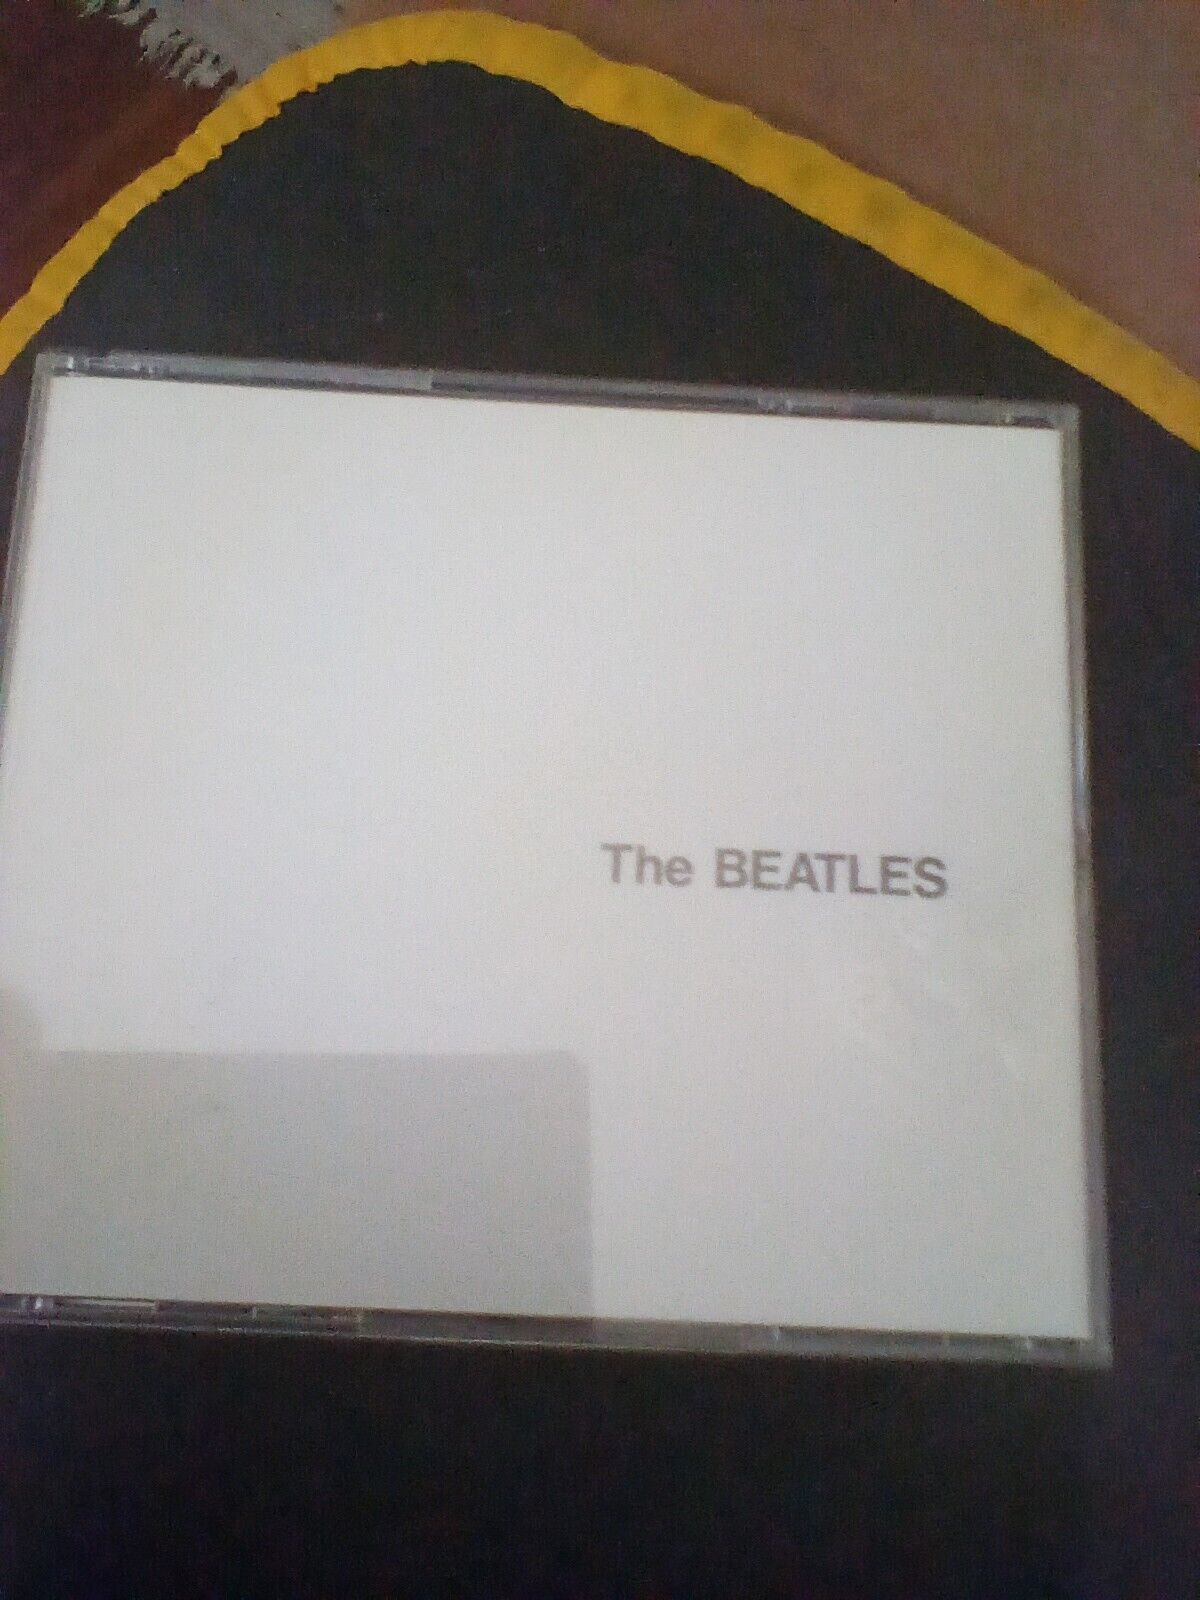 The Beatles White Album 2 CD Set 0777 7 46443 2